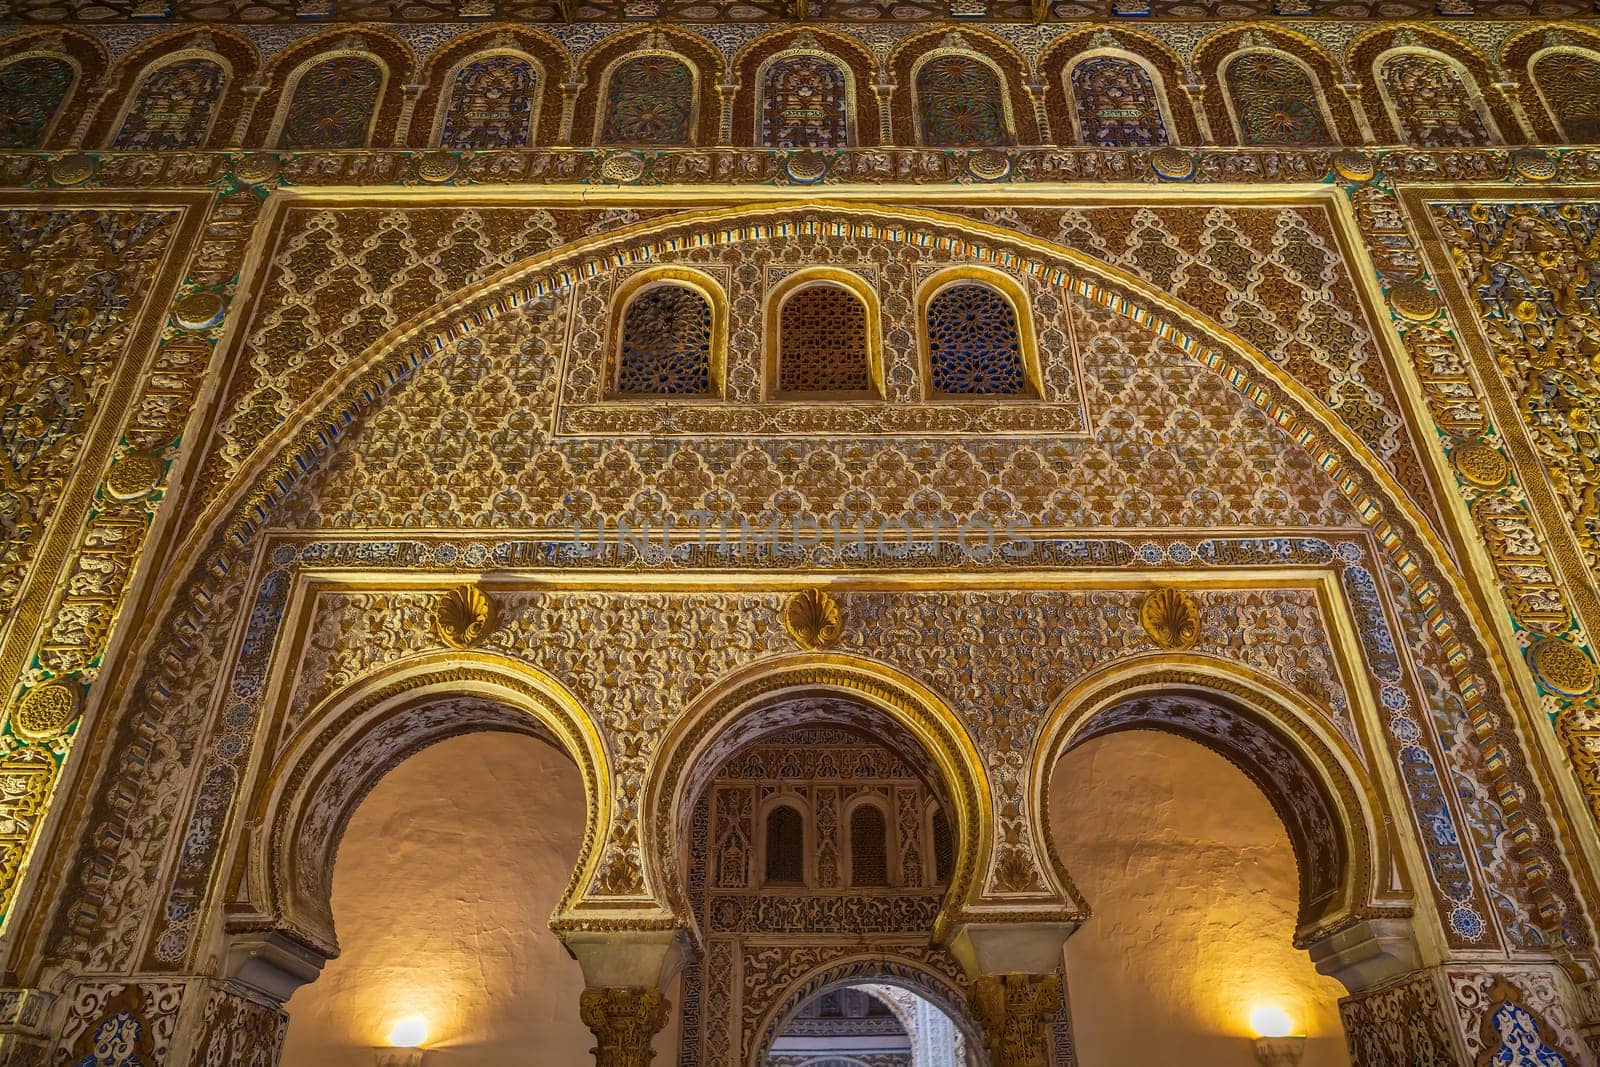 Interior details of Real Alcazar de Sevilla in Spain